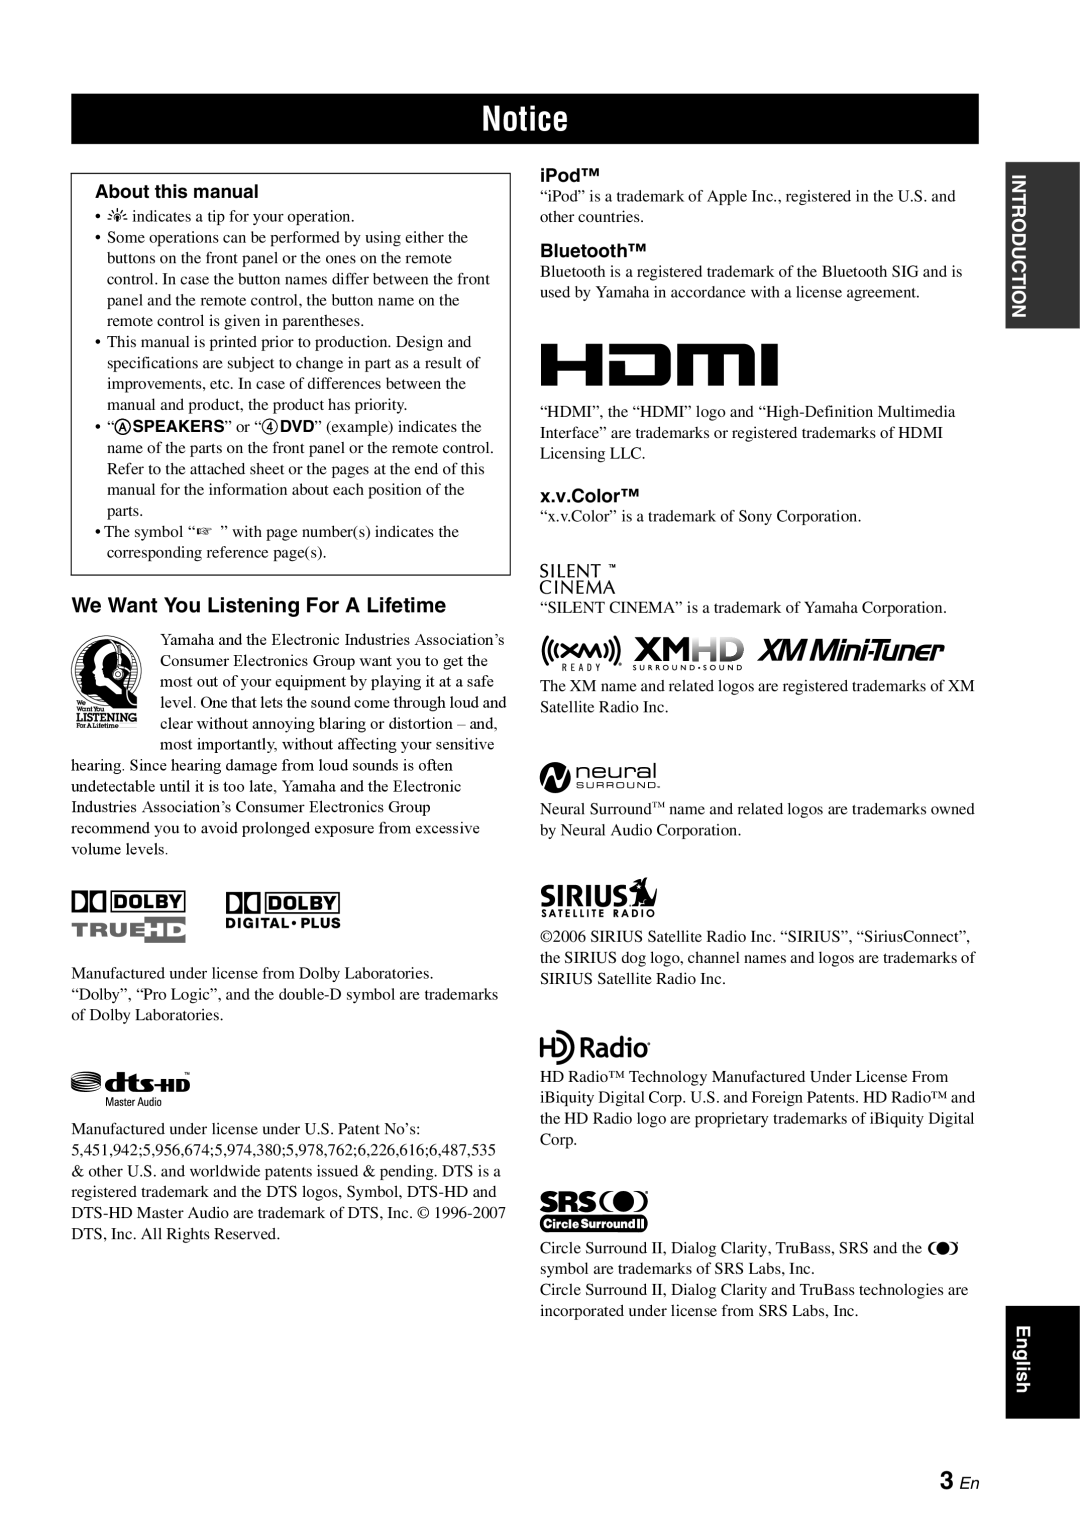 Yamaha RX-V863 owner manual Notice, 3 En, We Want You Listening For A Lifetime 